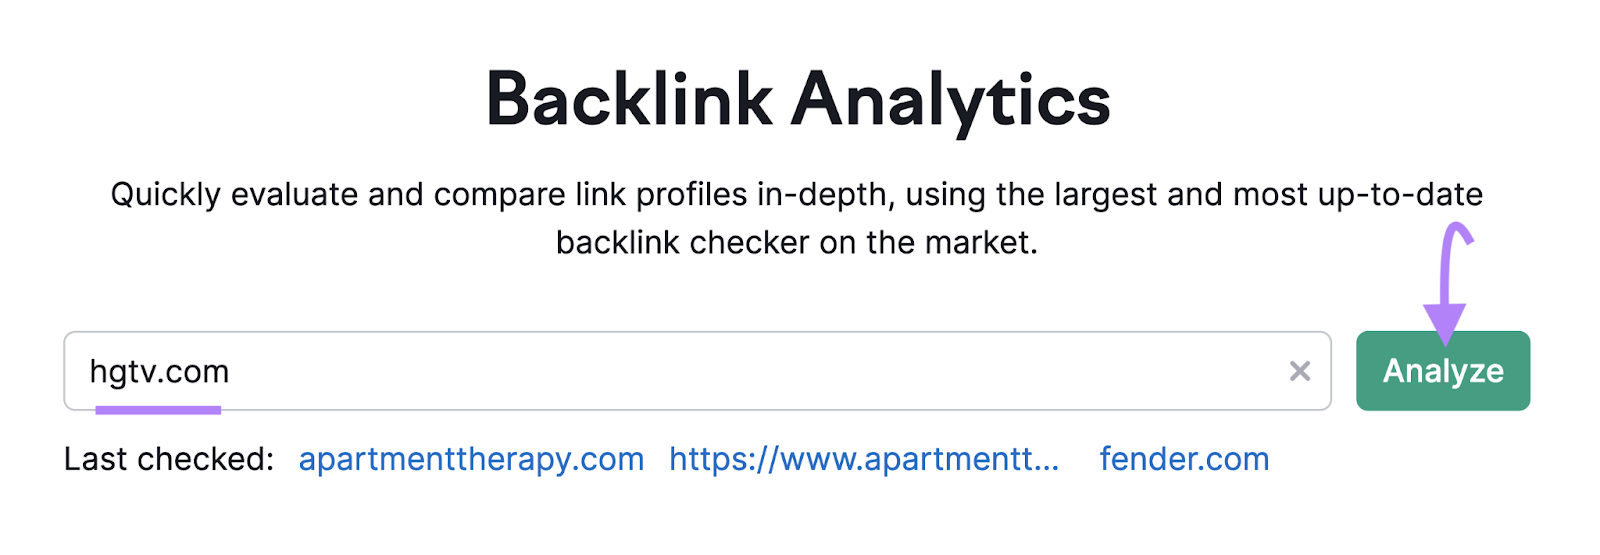 "hgtv.com" entered into the Backlink Analytics search bar